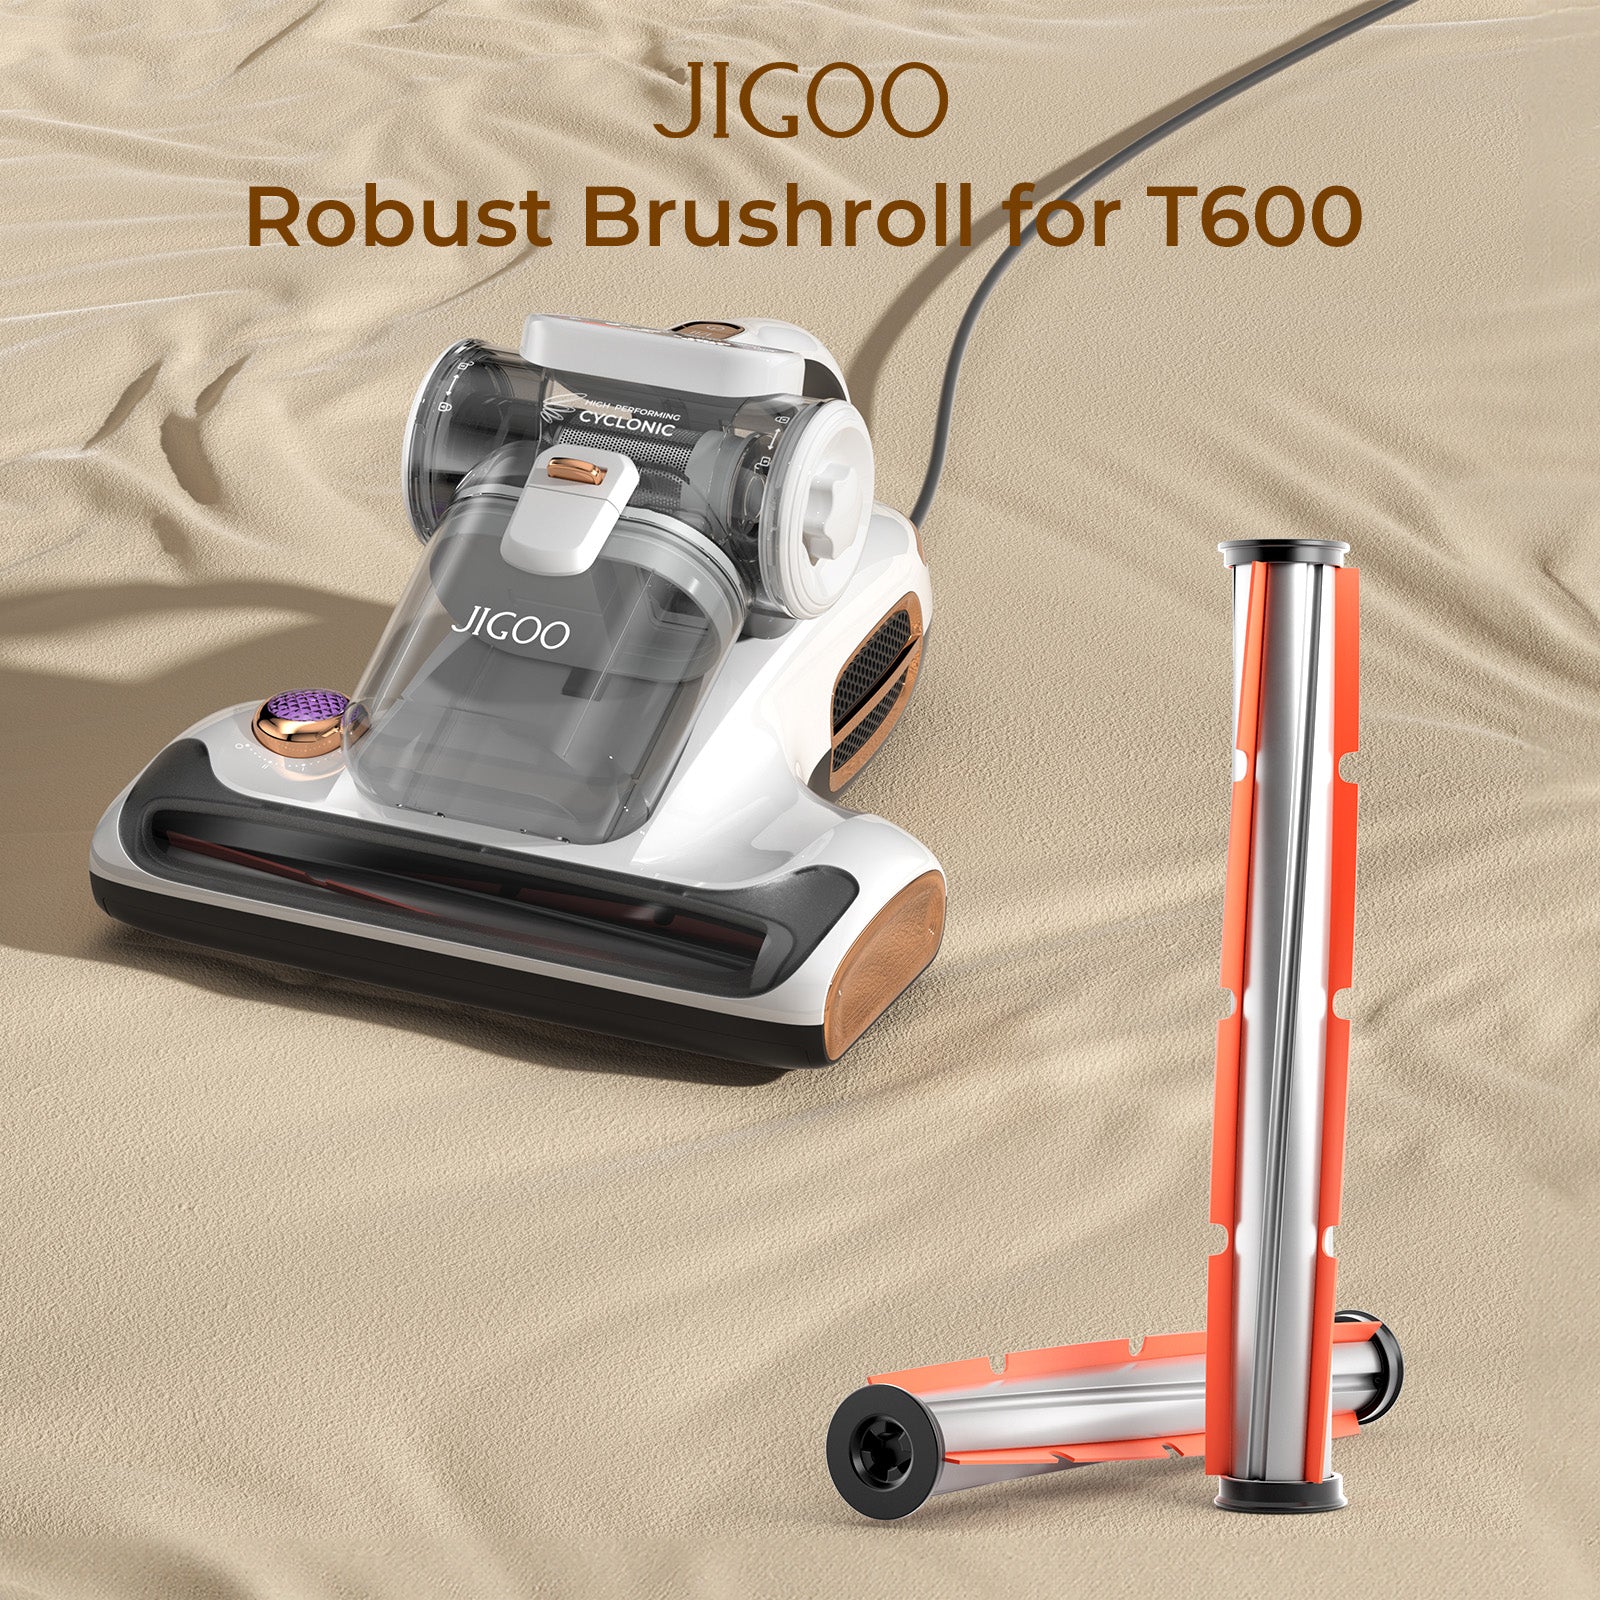 Jigoo Original Roller Brush for Jigoo T600 Anti-Mite Vacuum